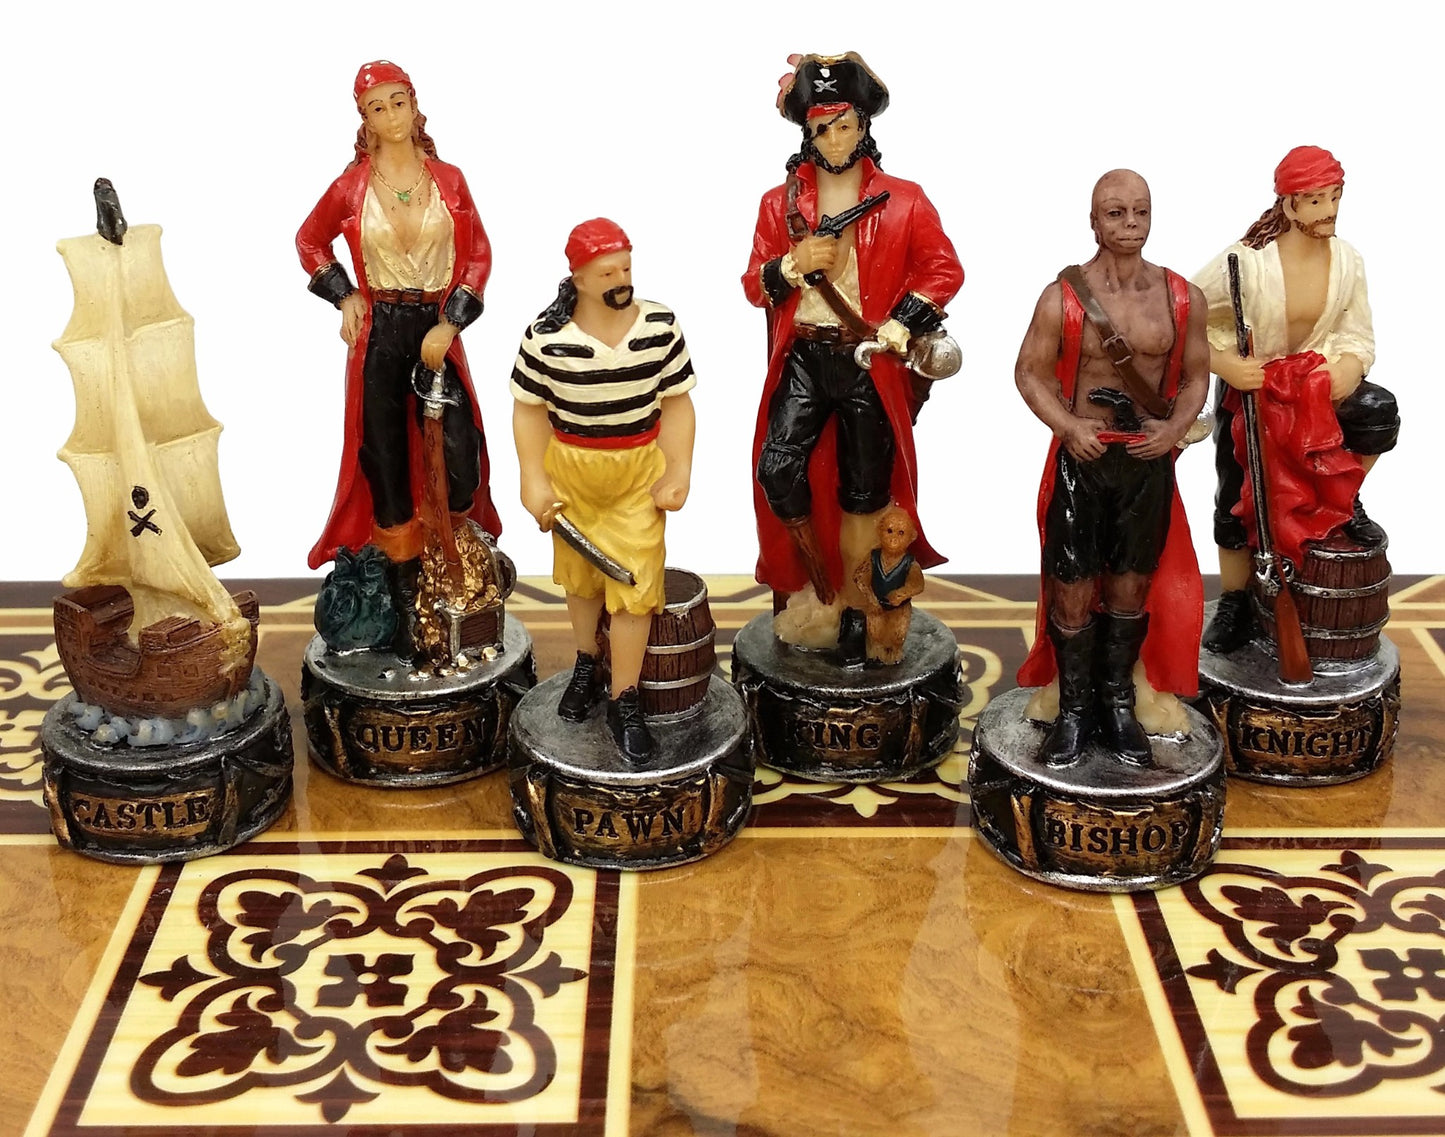 Pirates vs Royal Navy Chess Set W/ 17" Burlwood Color Board